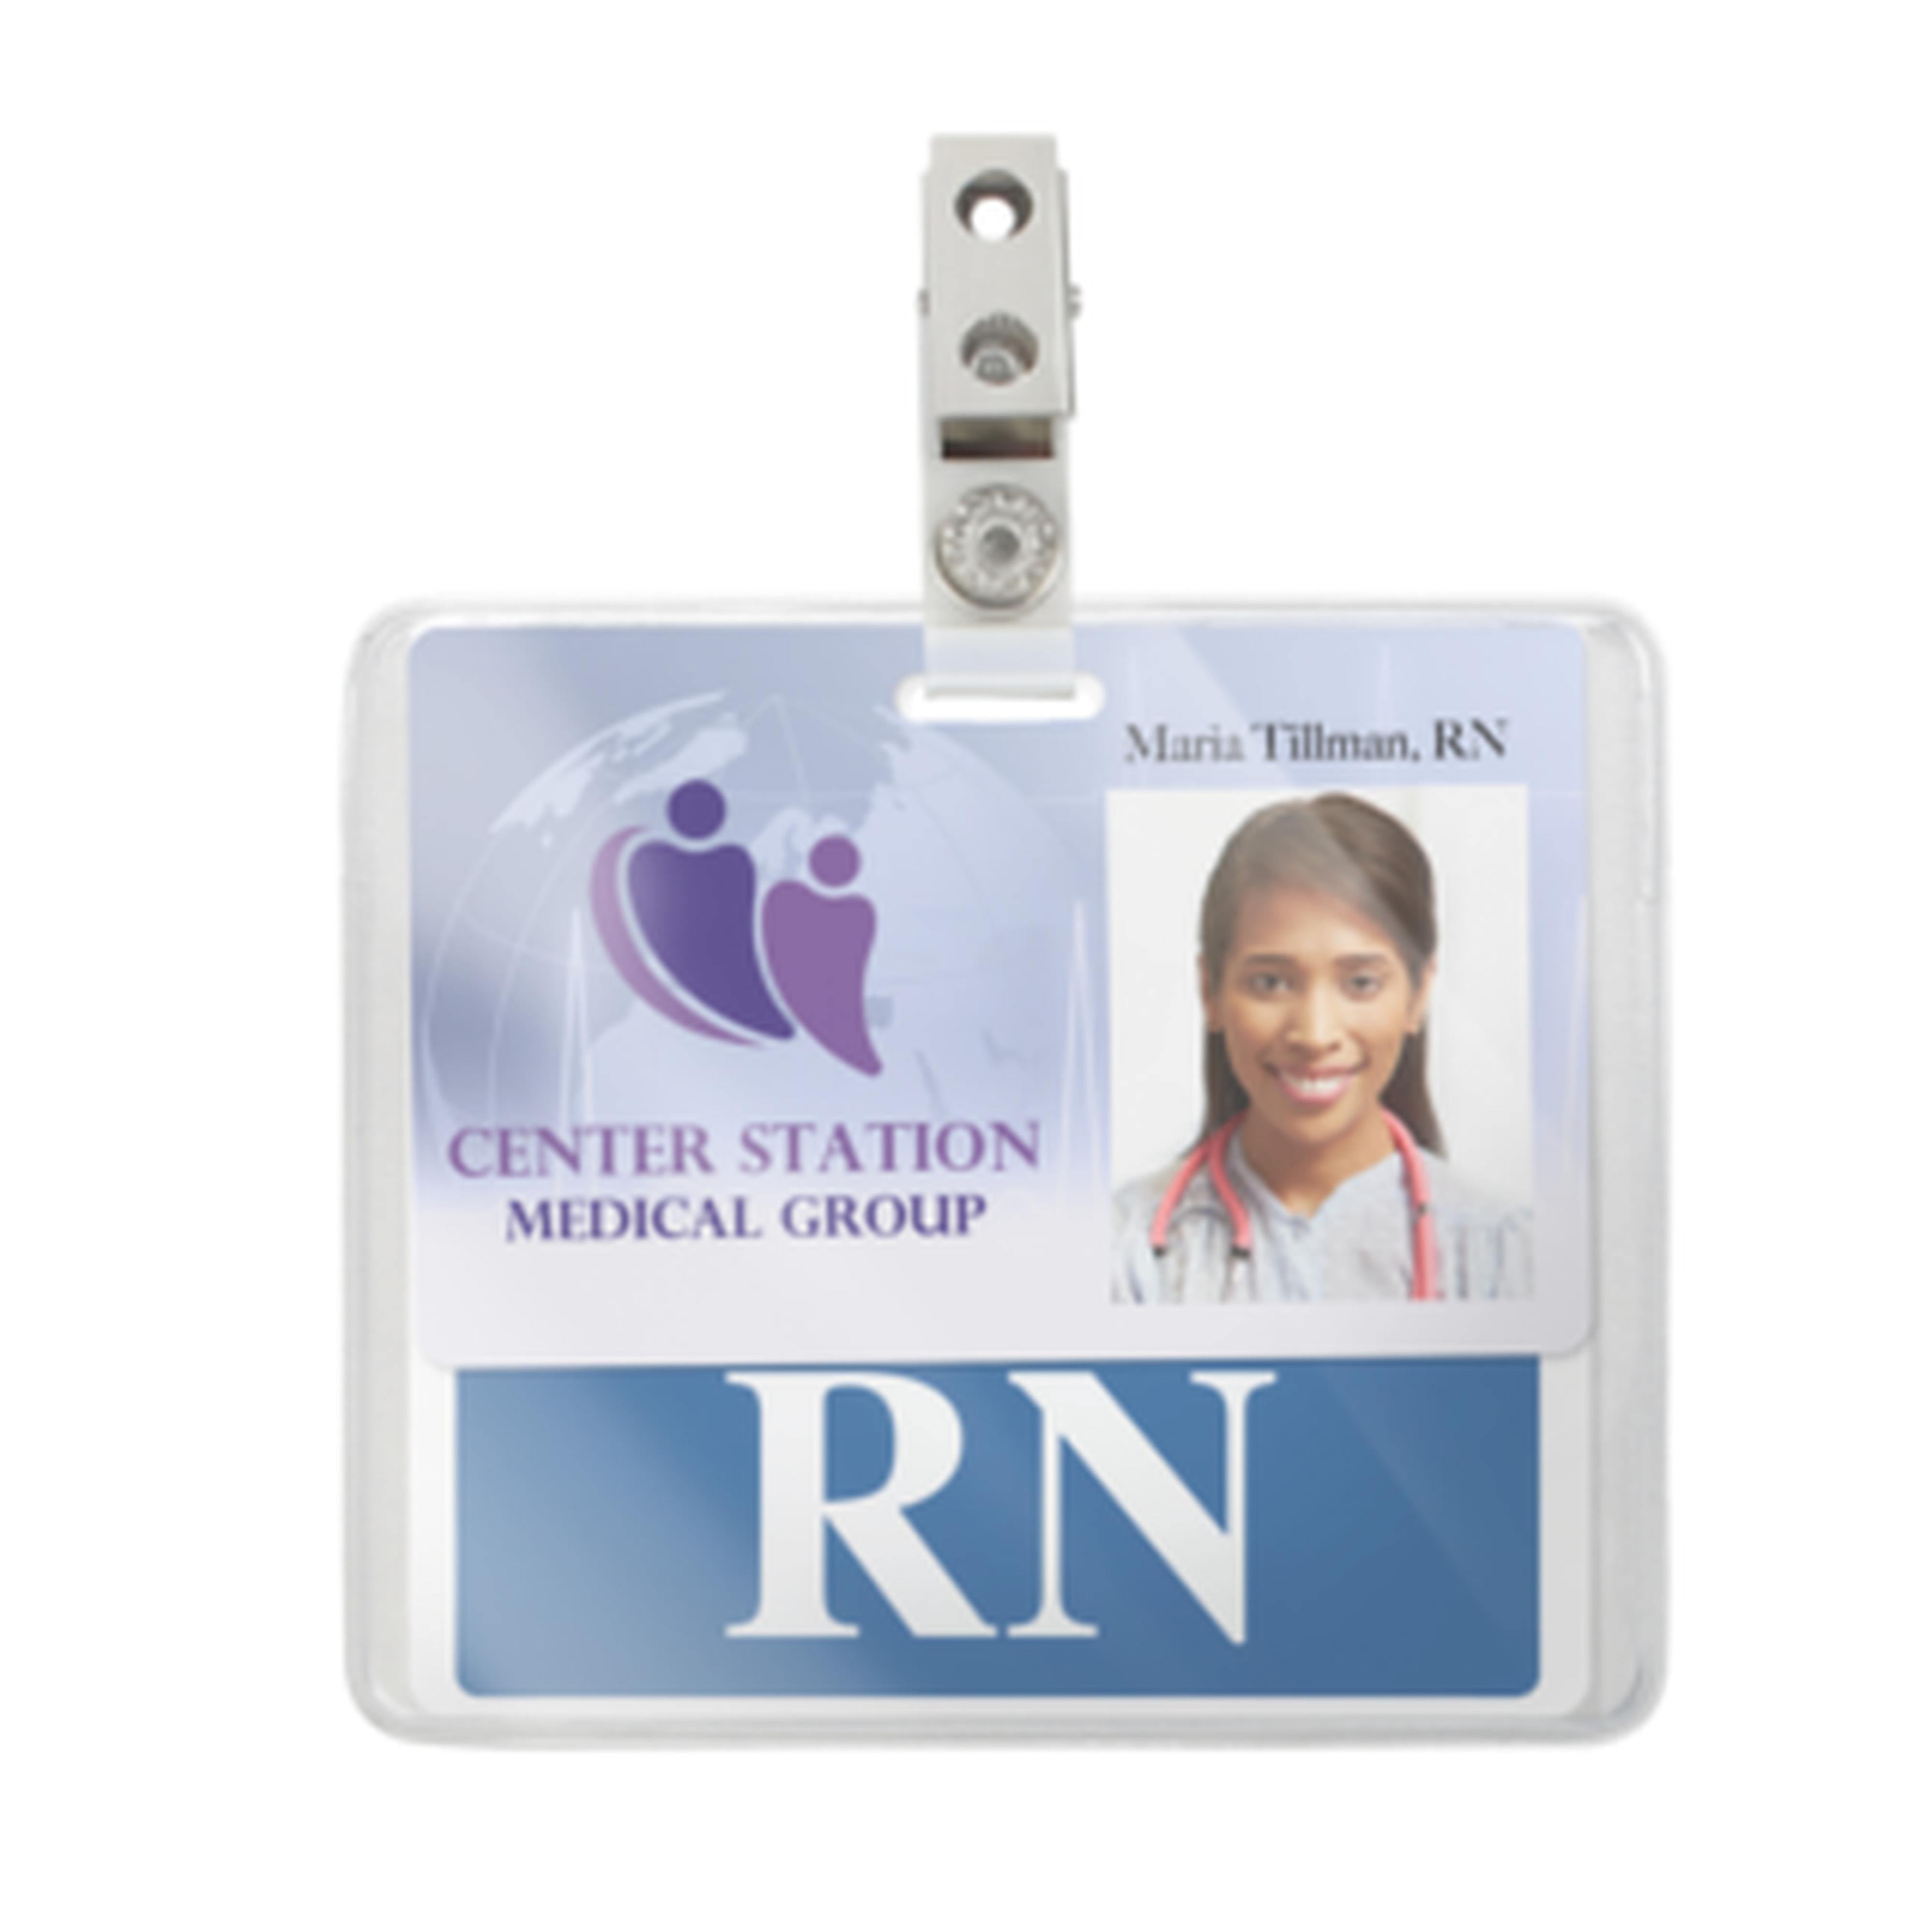 10 Pack - Horizontal RN Badge Buddies for Registered Nurses